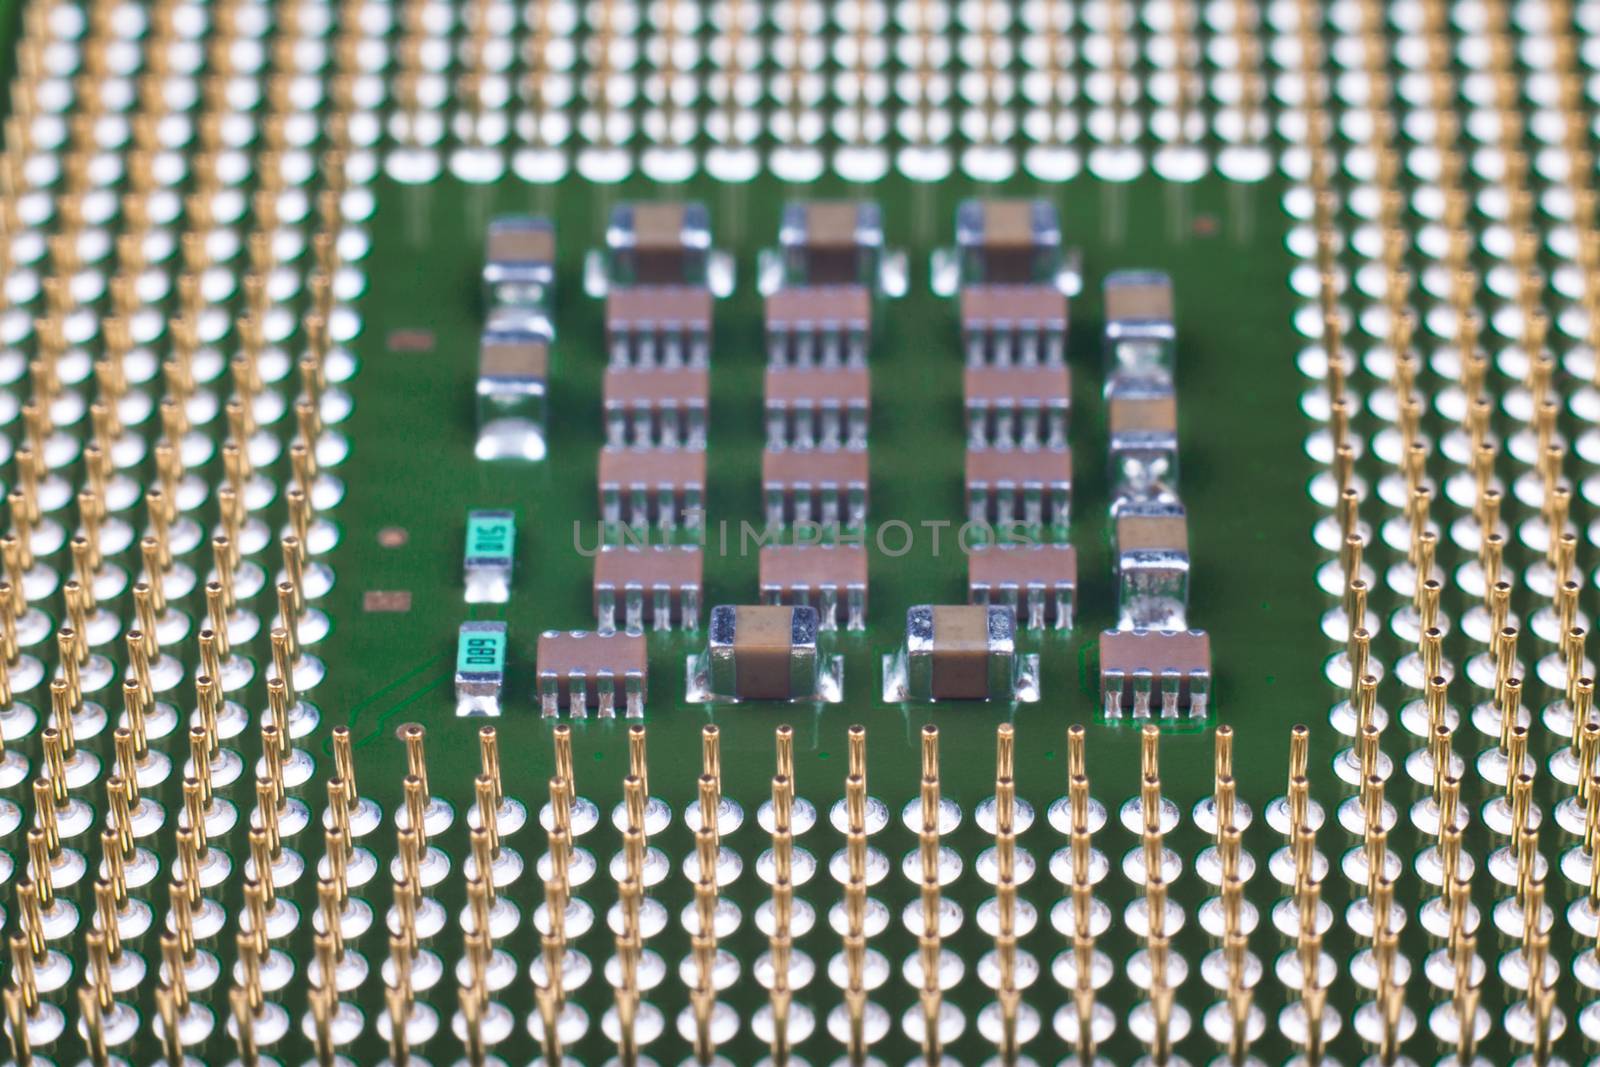 Microprocessor by orcearo